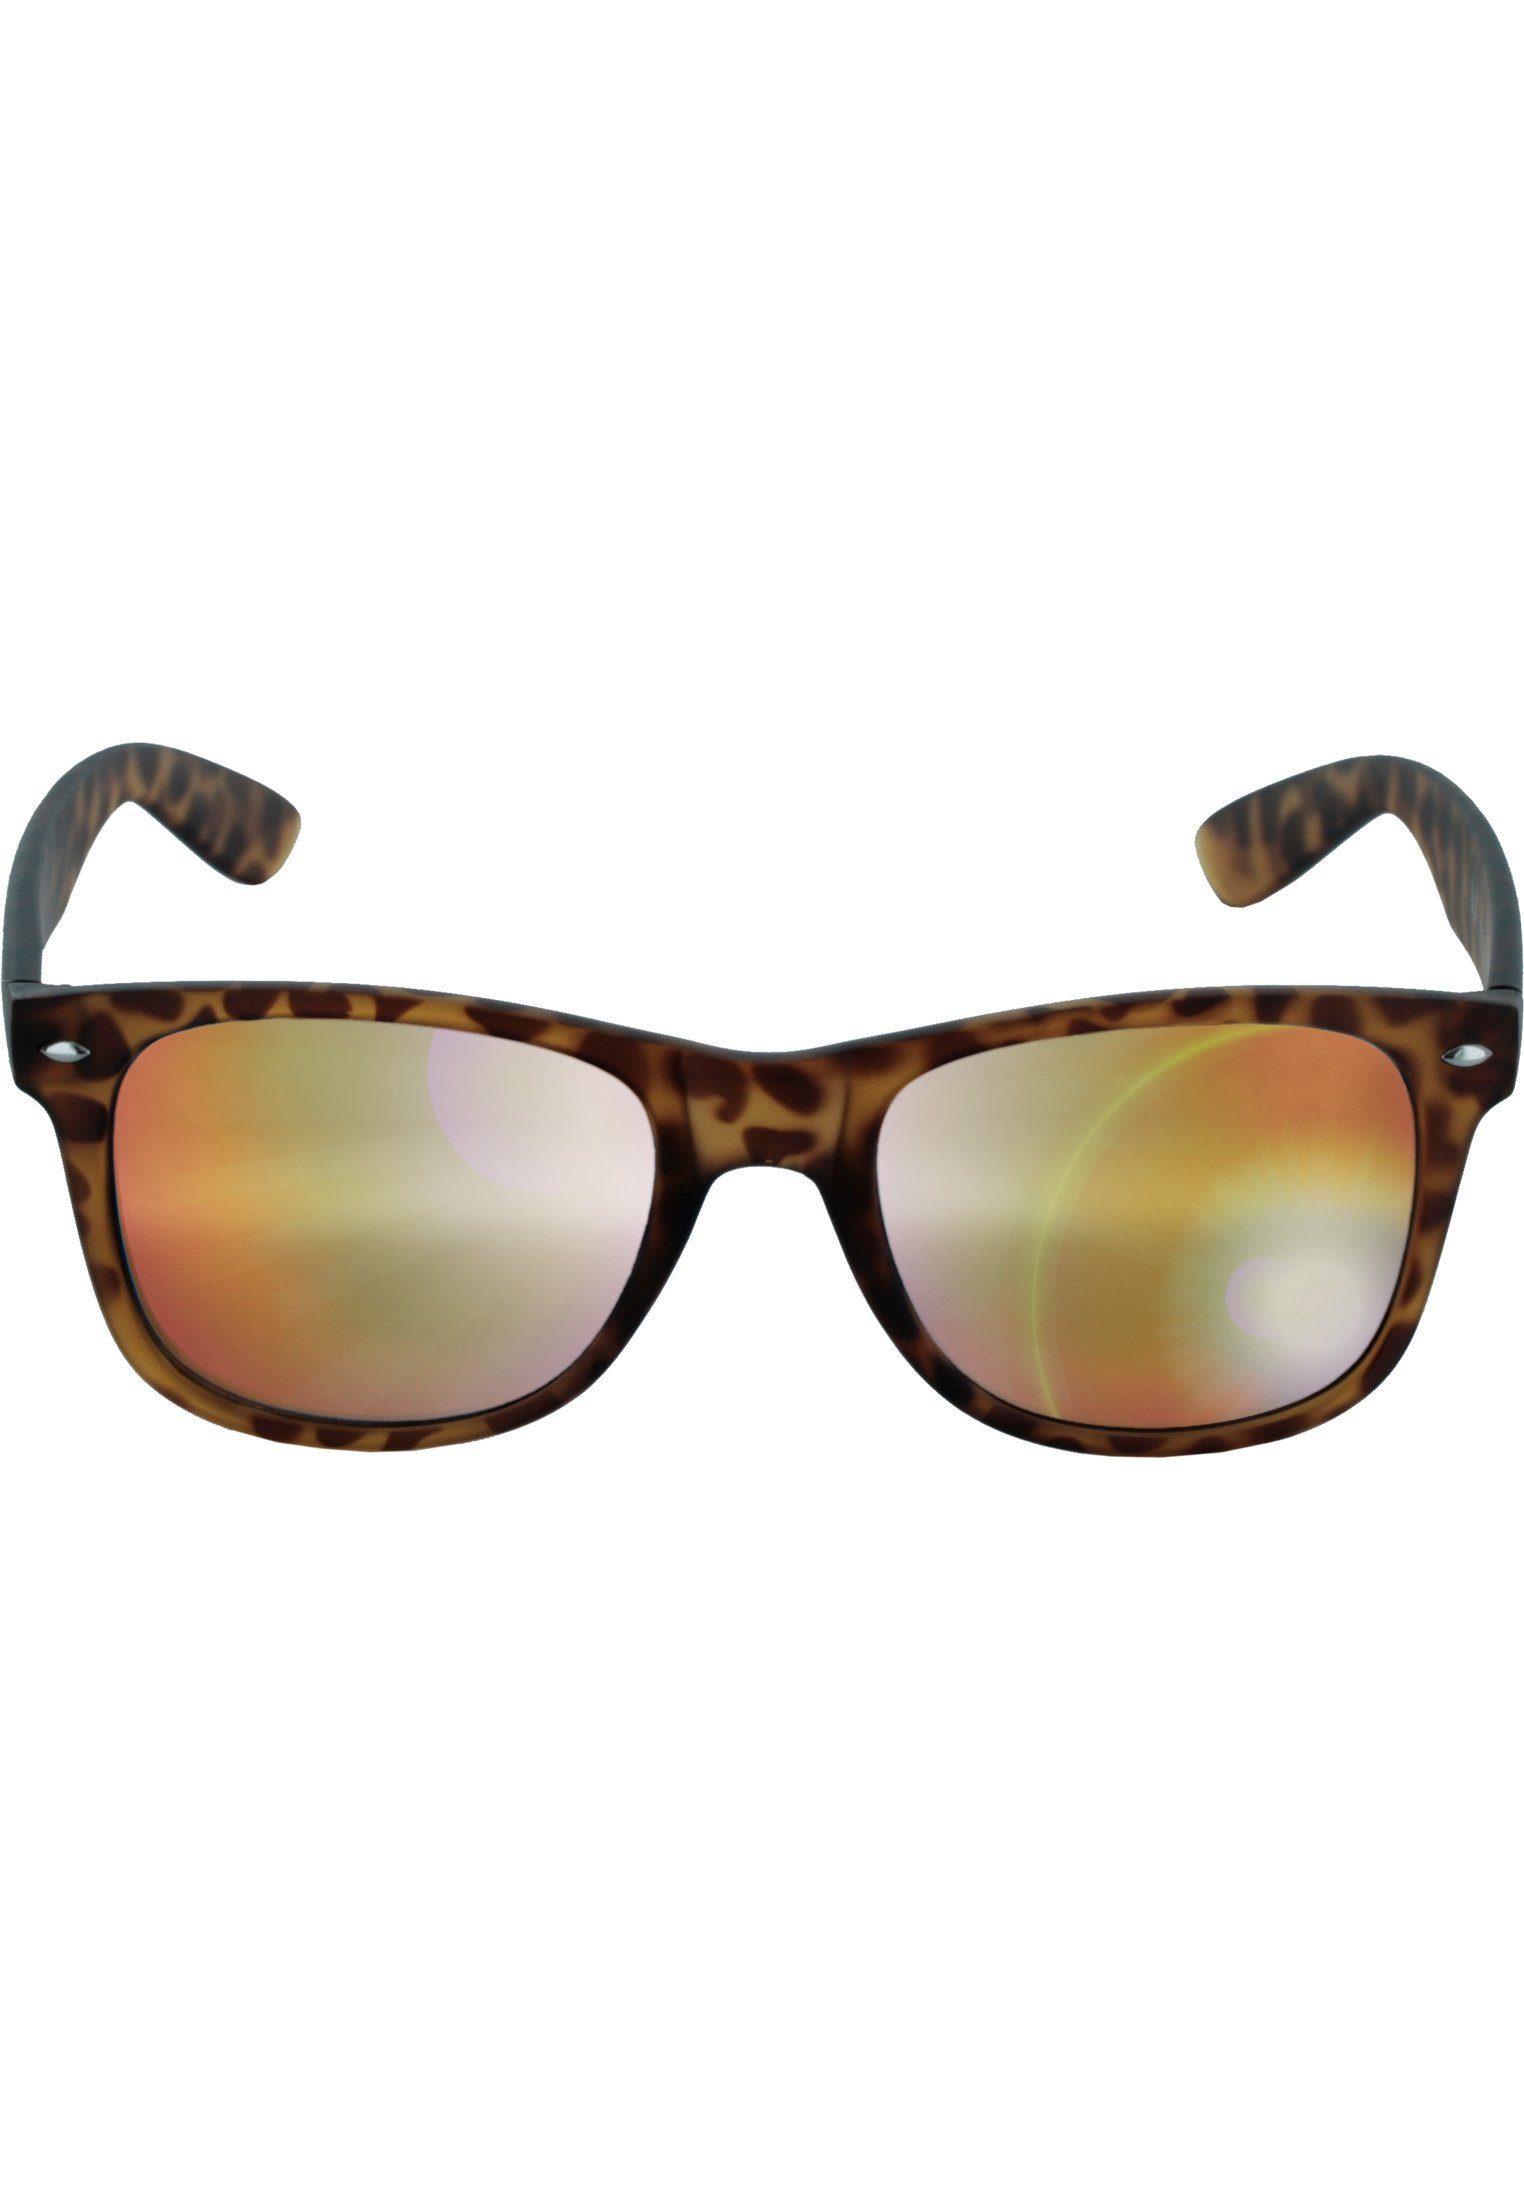 MSTRDS Sonnenbrille Accessoires Sunglasses Likoma Mirror amber/orange